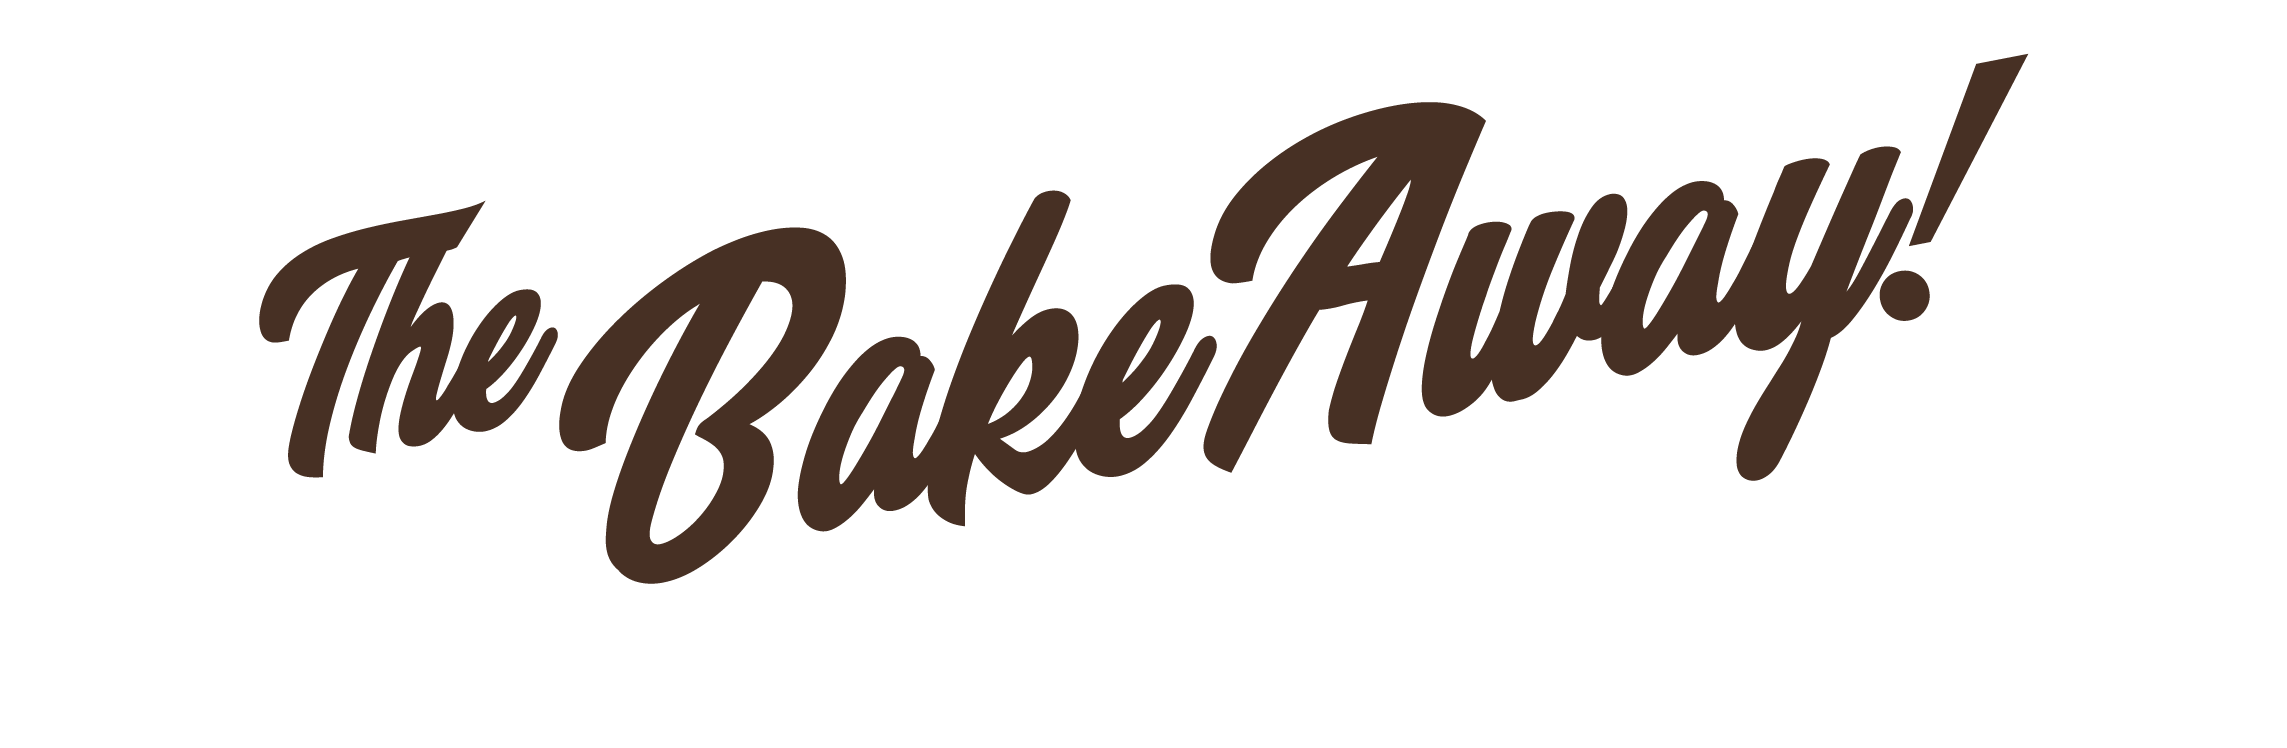 THE BAKEAWAY